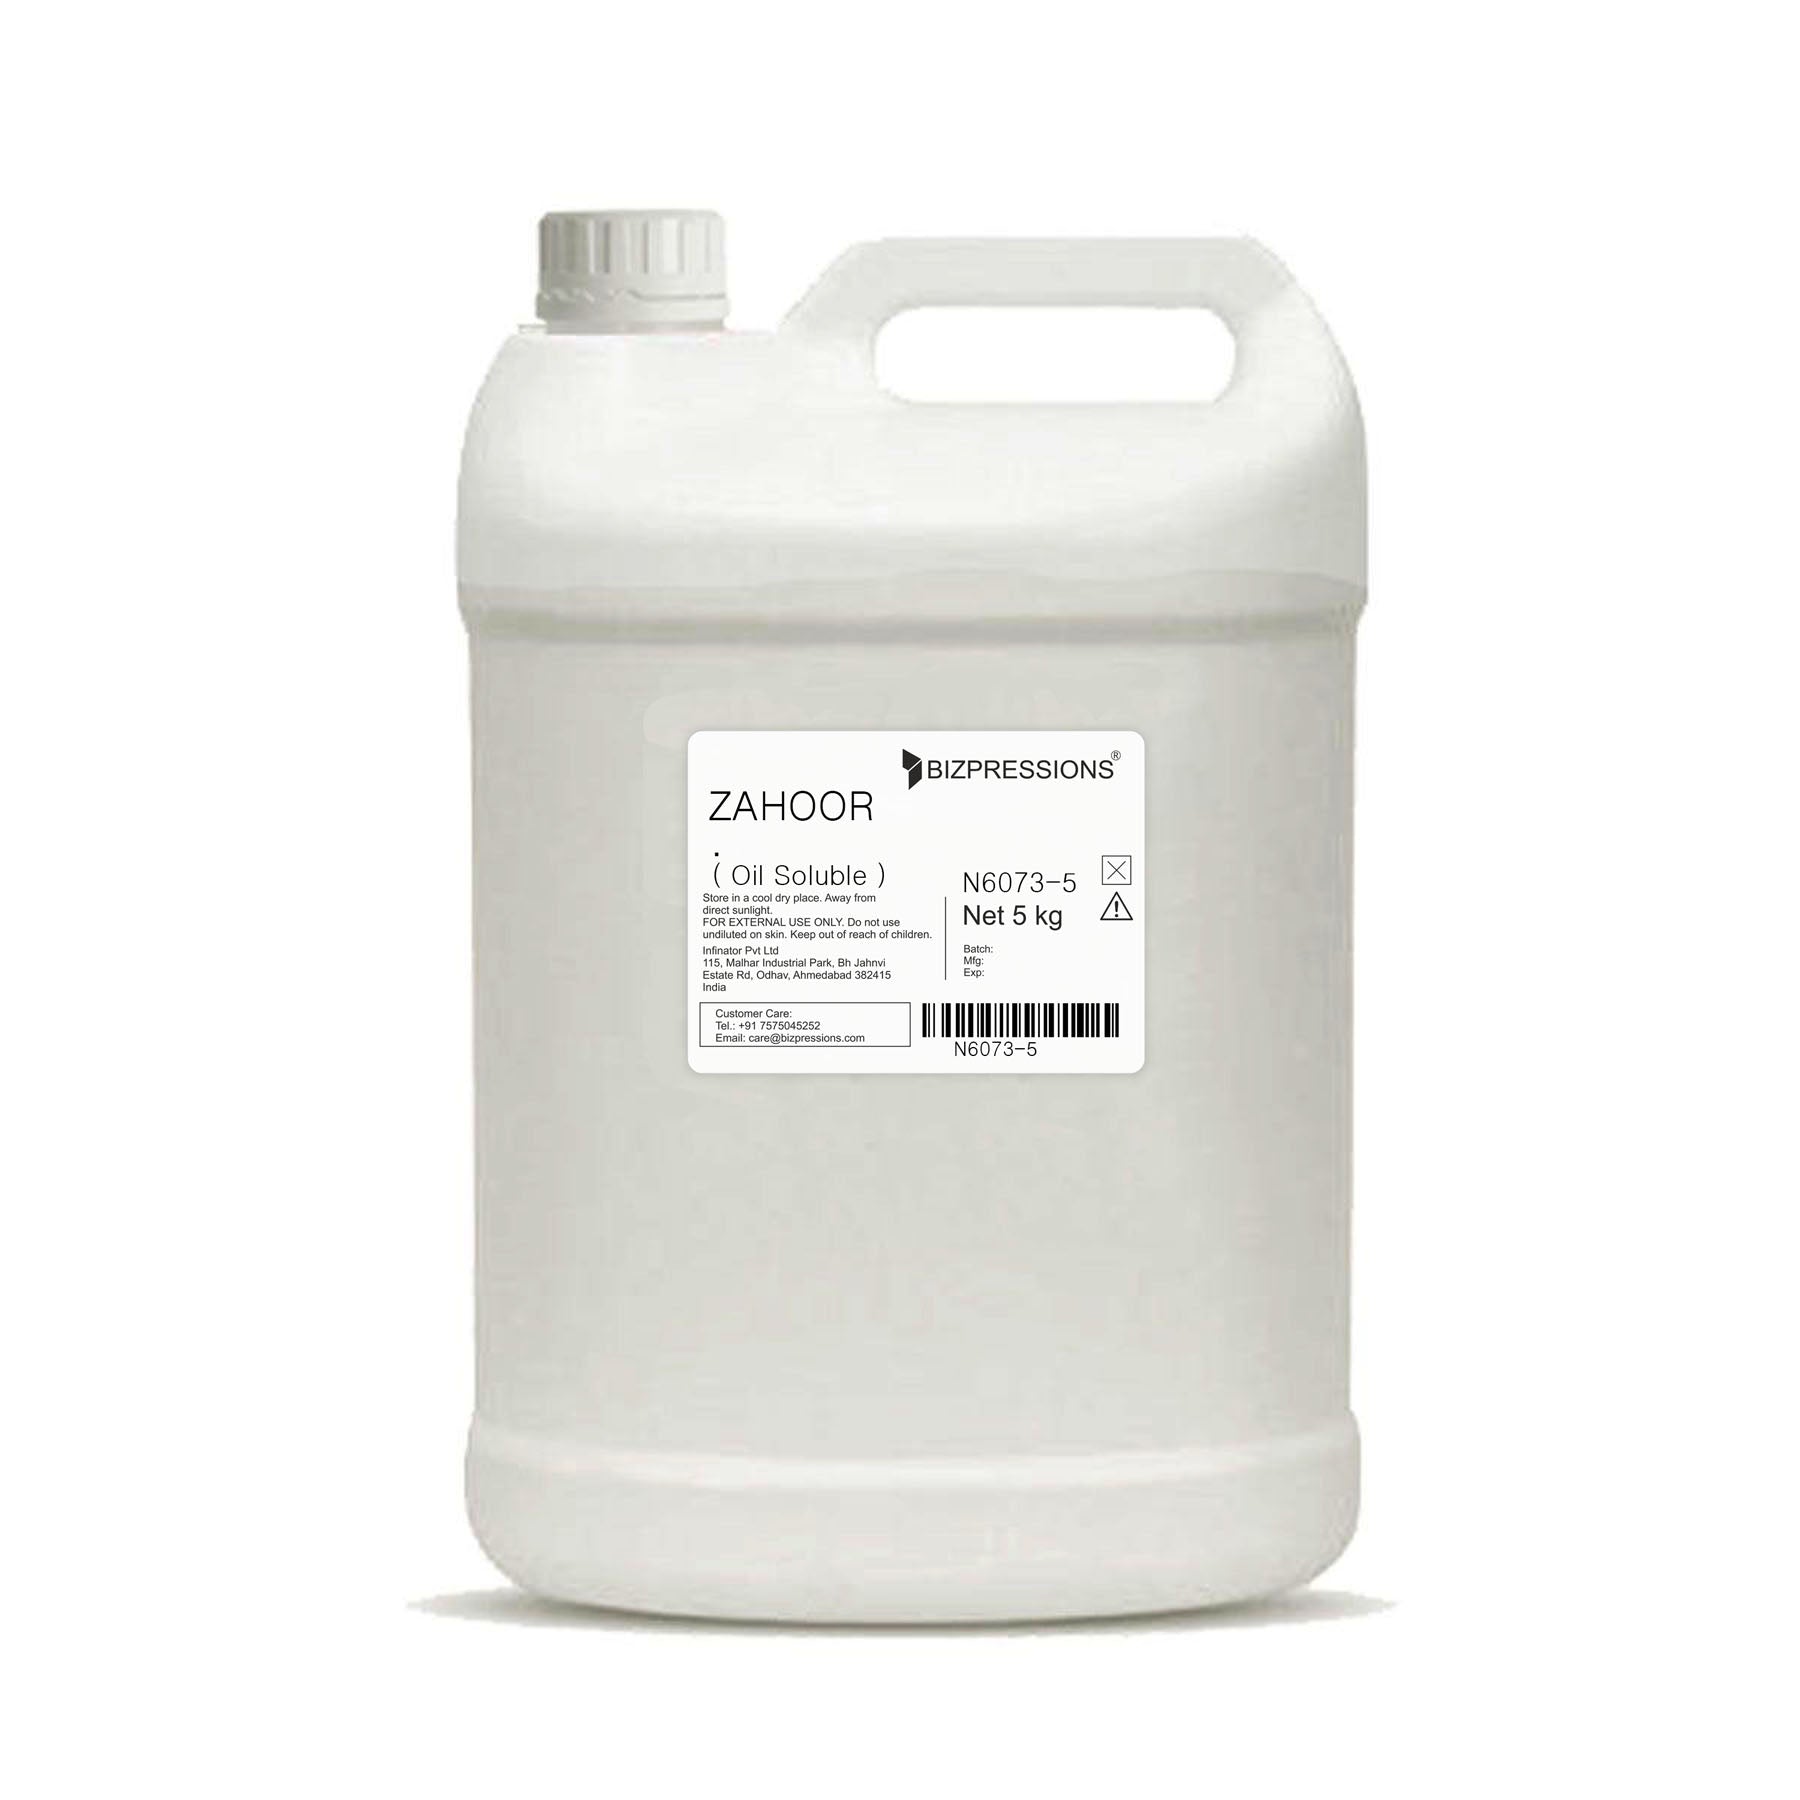 ZAHOOR - Fragrance ( Oil Soluble ) - 5 kg